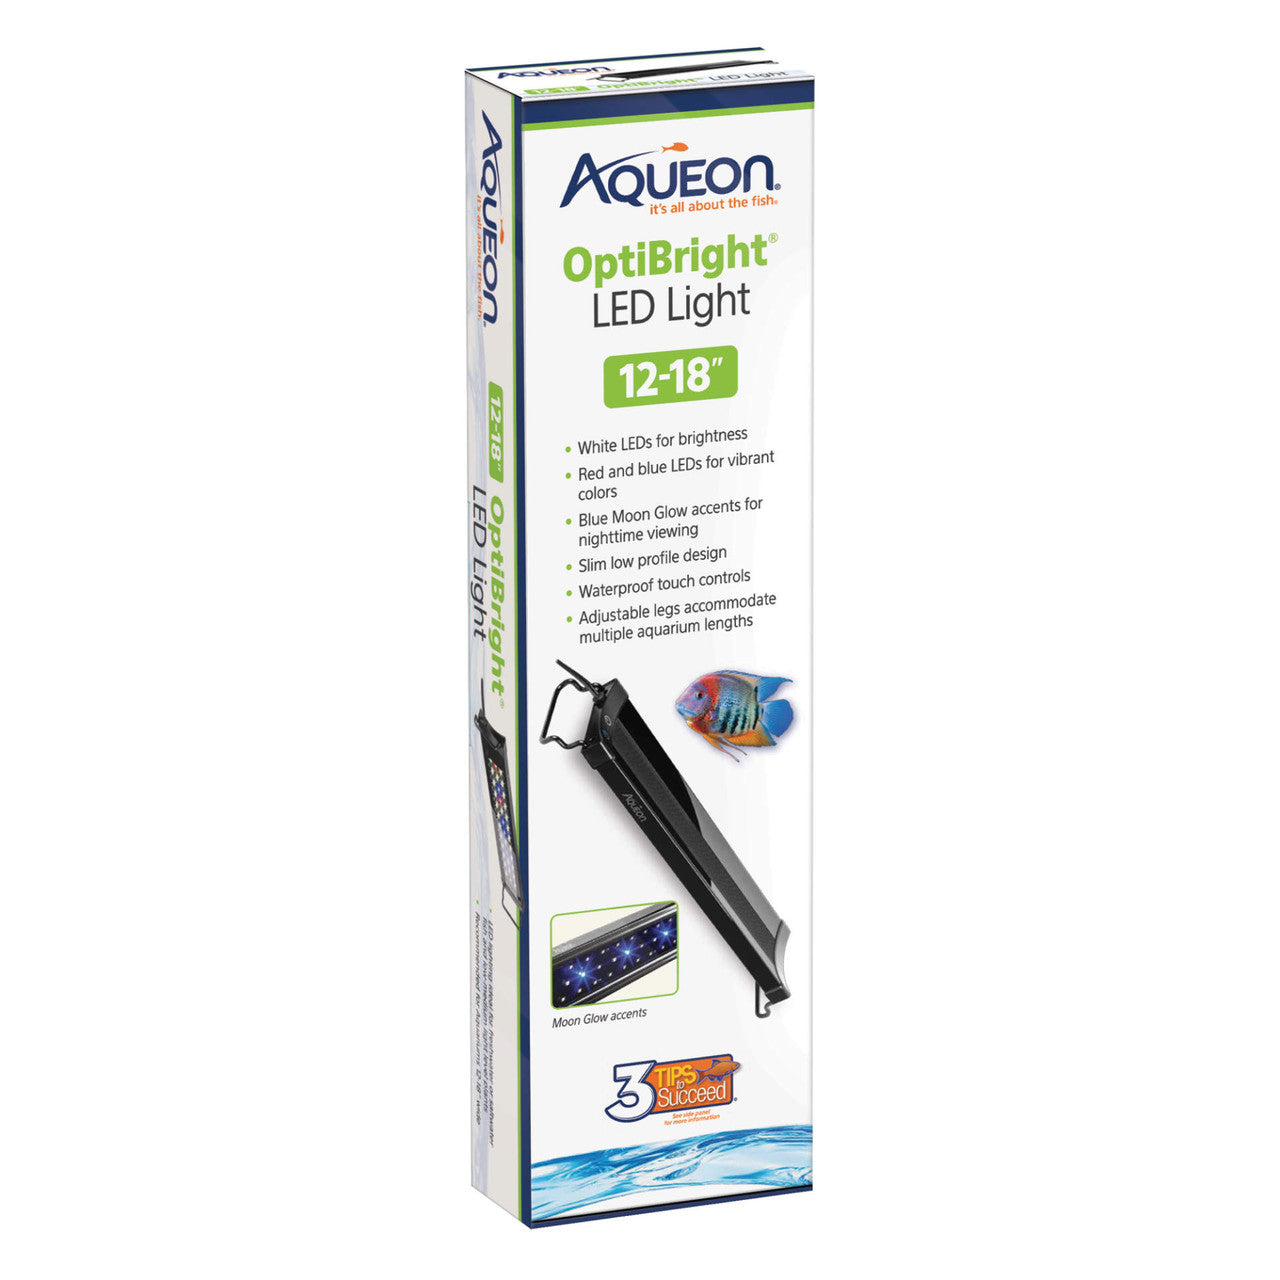 Aqueon LED OptiBright Light Fixture 12-18 Inches